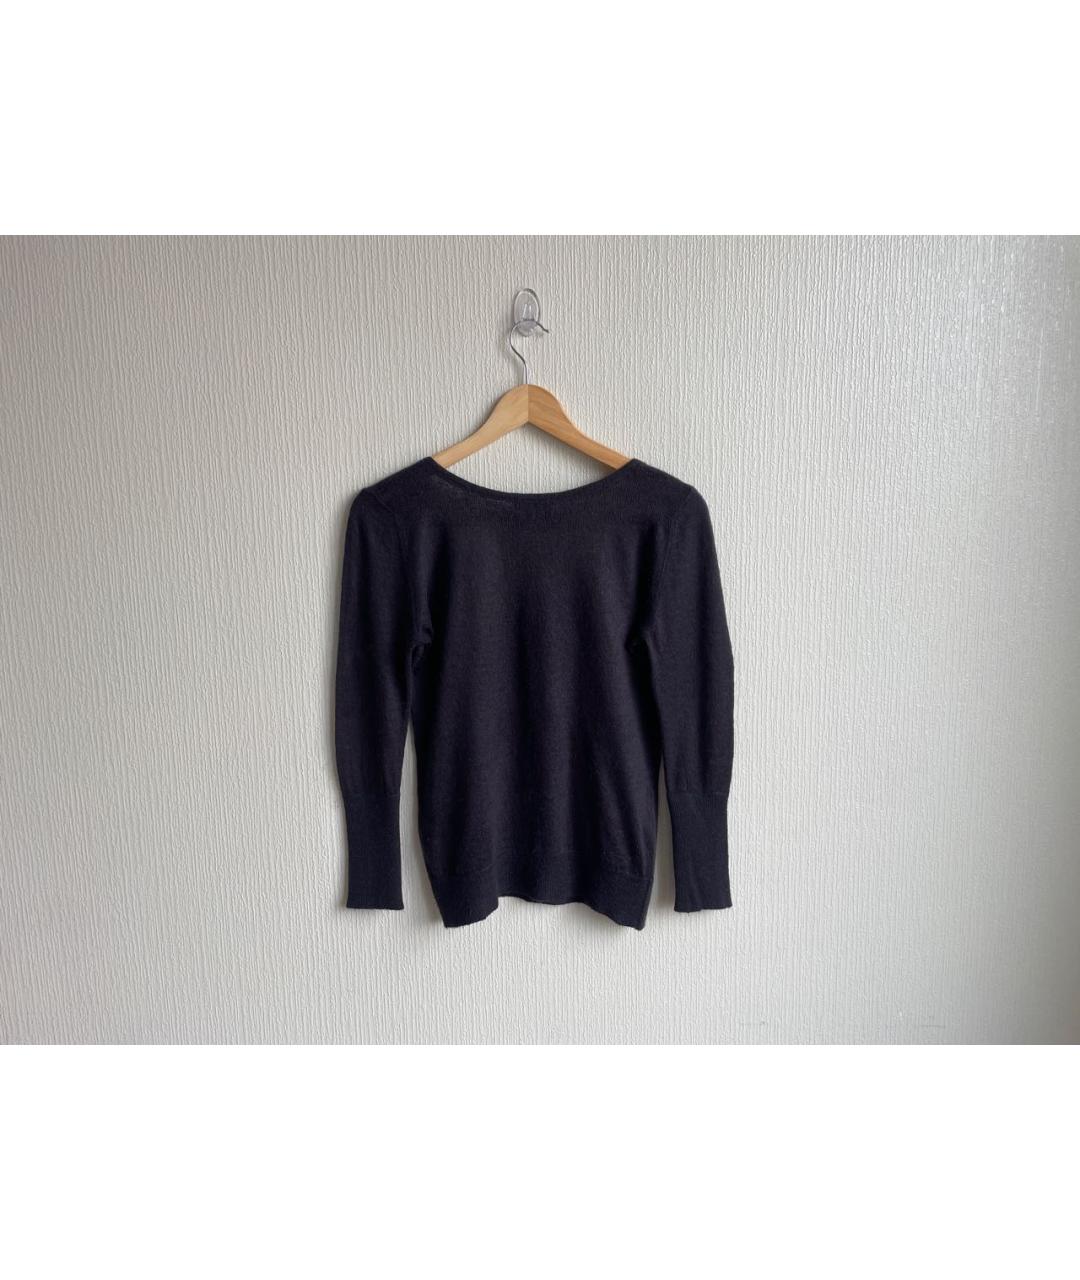 MAX&CO Коричневый шерстяной джемпер / свитер, фото 2